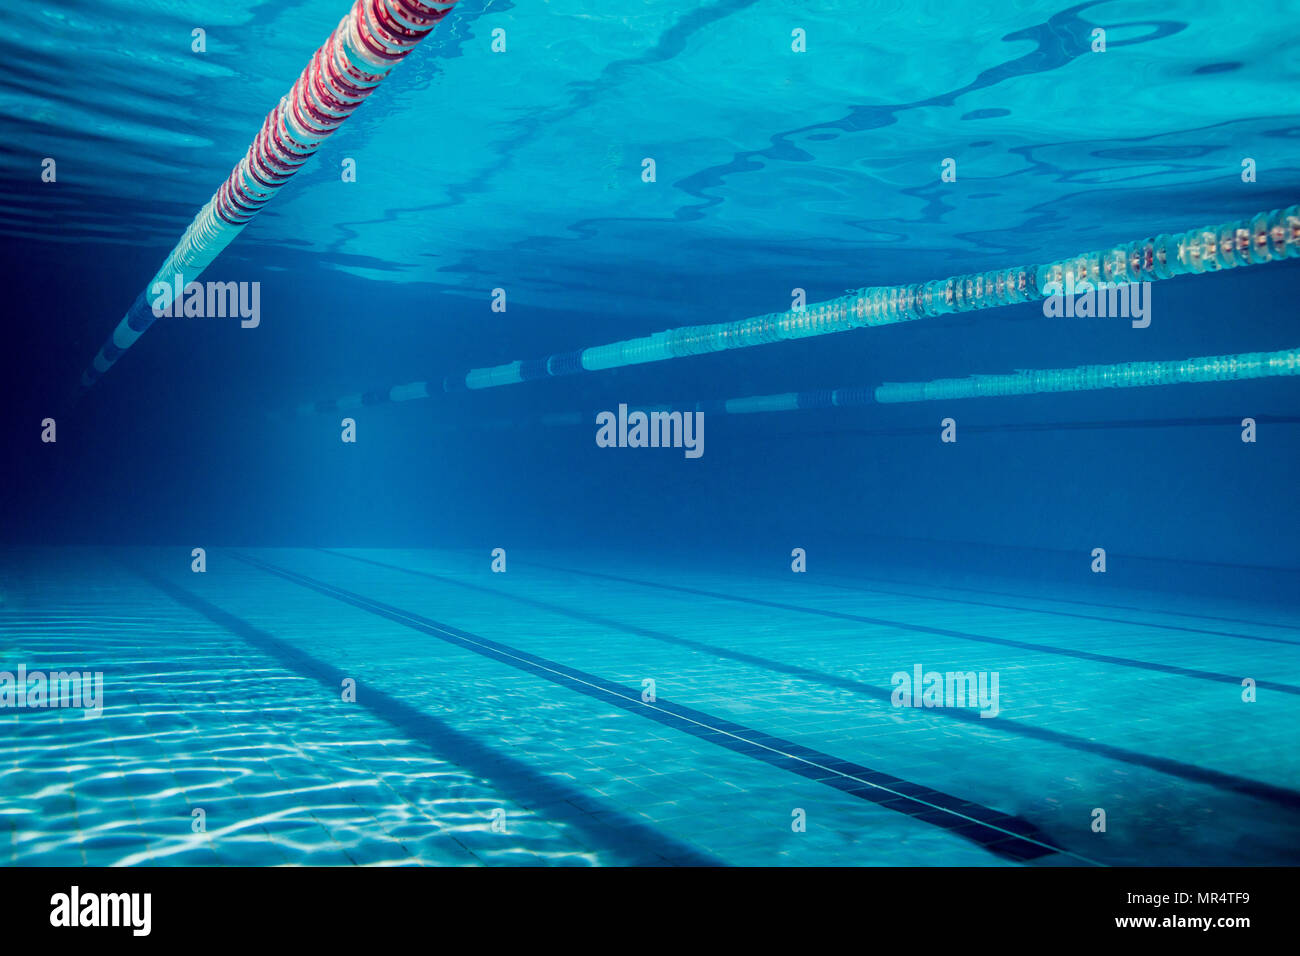 underwater picture of empty swimming pool Stock Photo